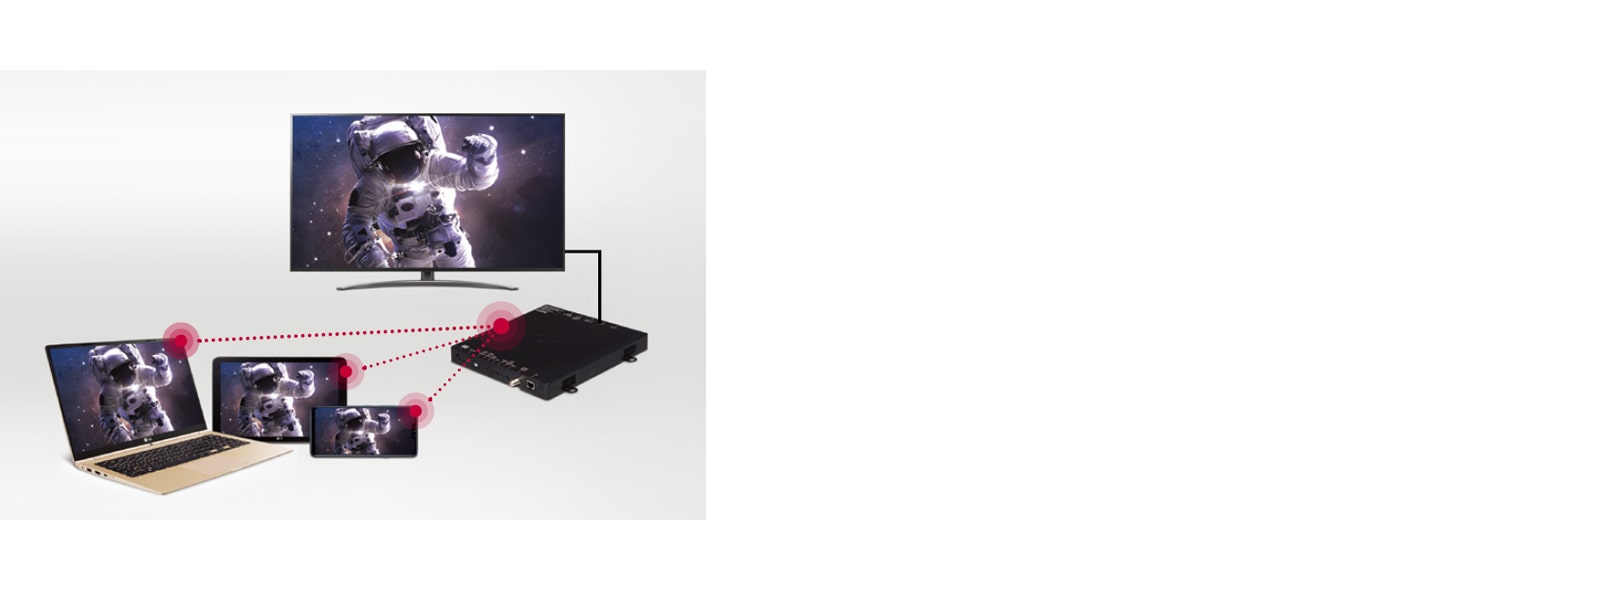 LG Pro:Centric SMART Set Top Box